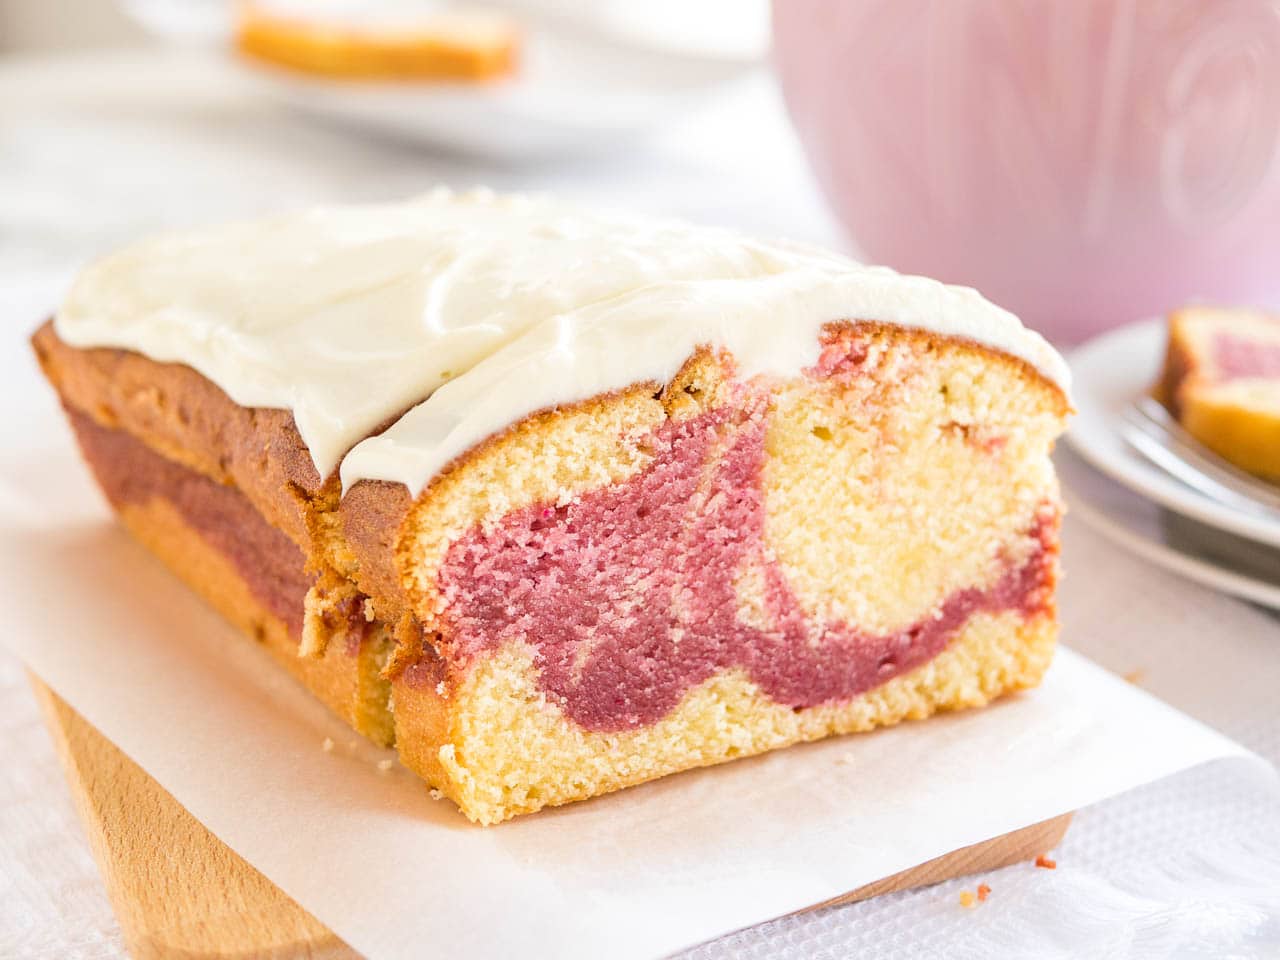 https://platedcravings.com/wp-content/uploads/2016/06/Copycat-Starbucks-Raspberry-Swirl-Pound-Cake-Plated-Cravings-1.jpg